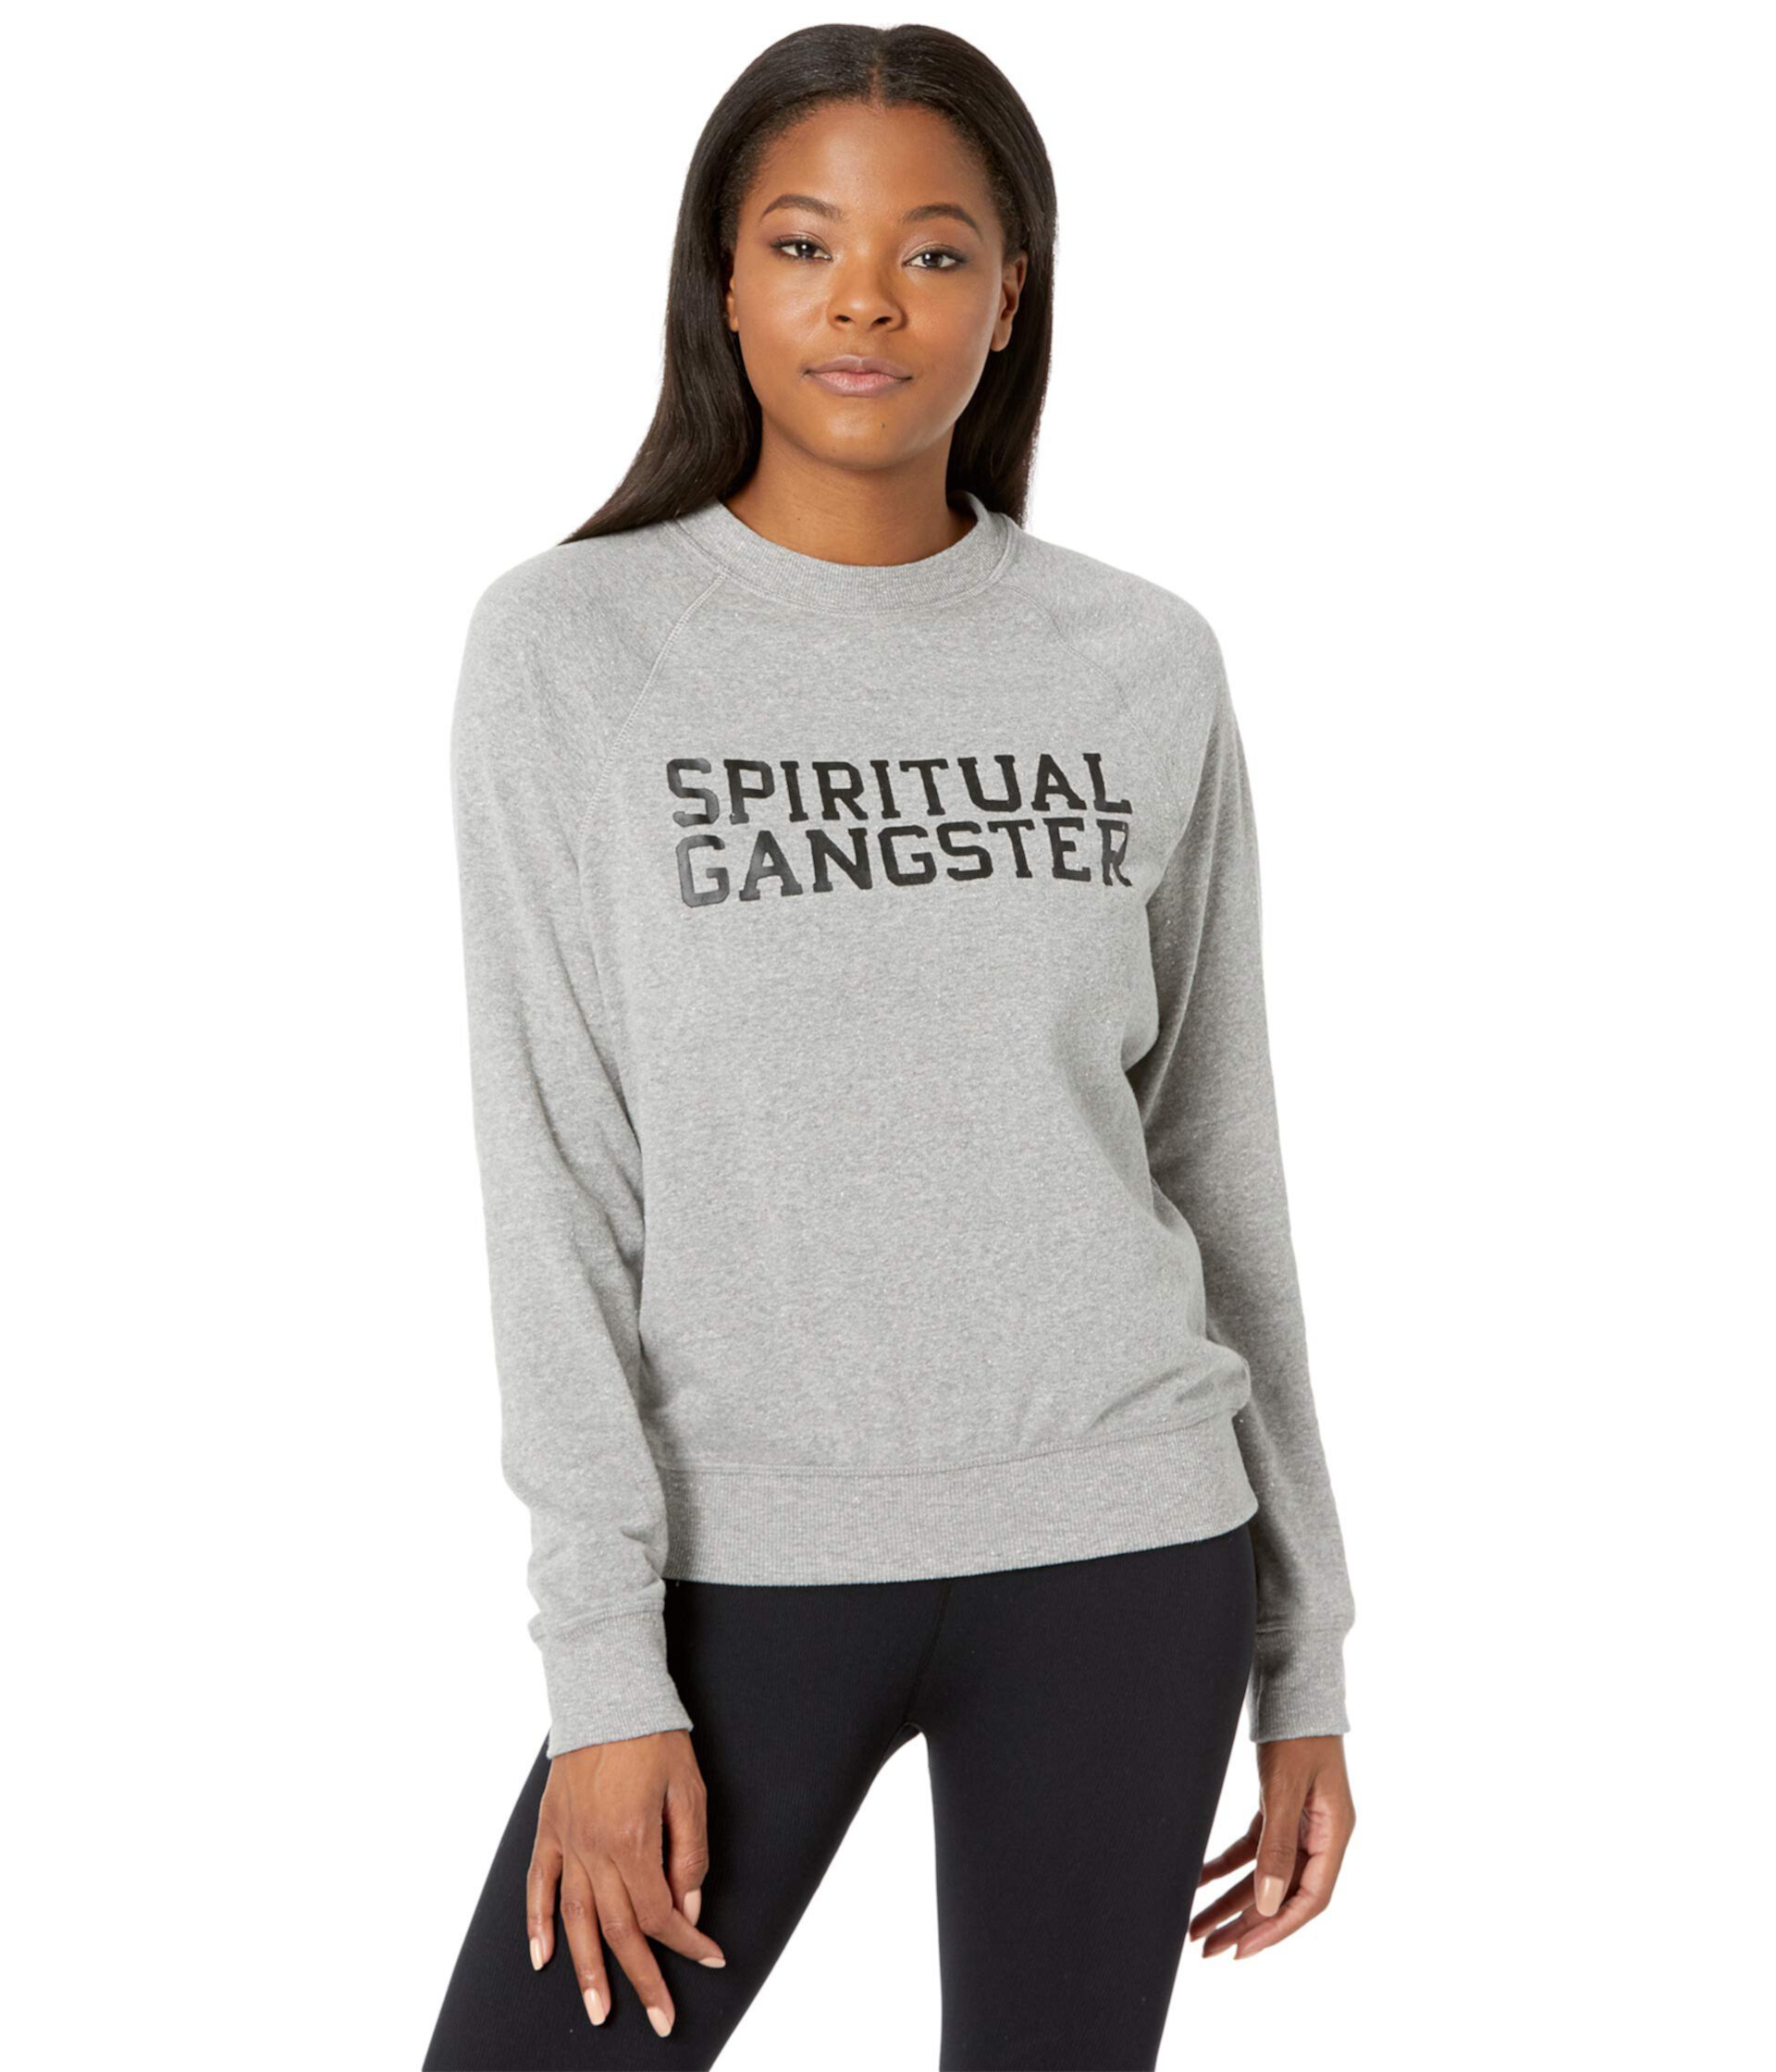 Пуловер старой школы Spiritual Gangster